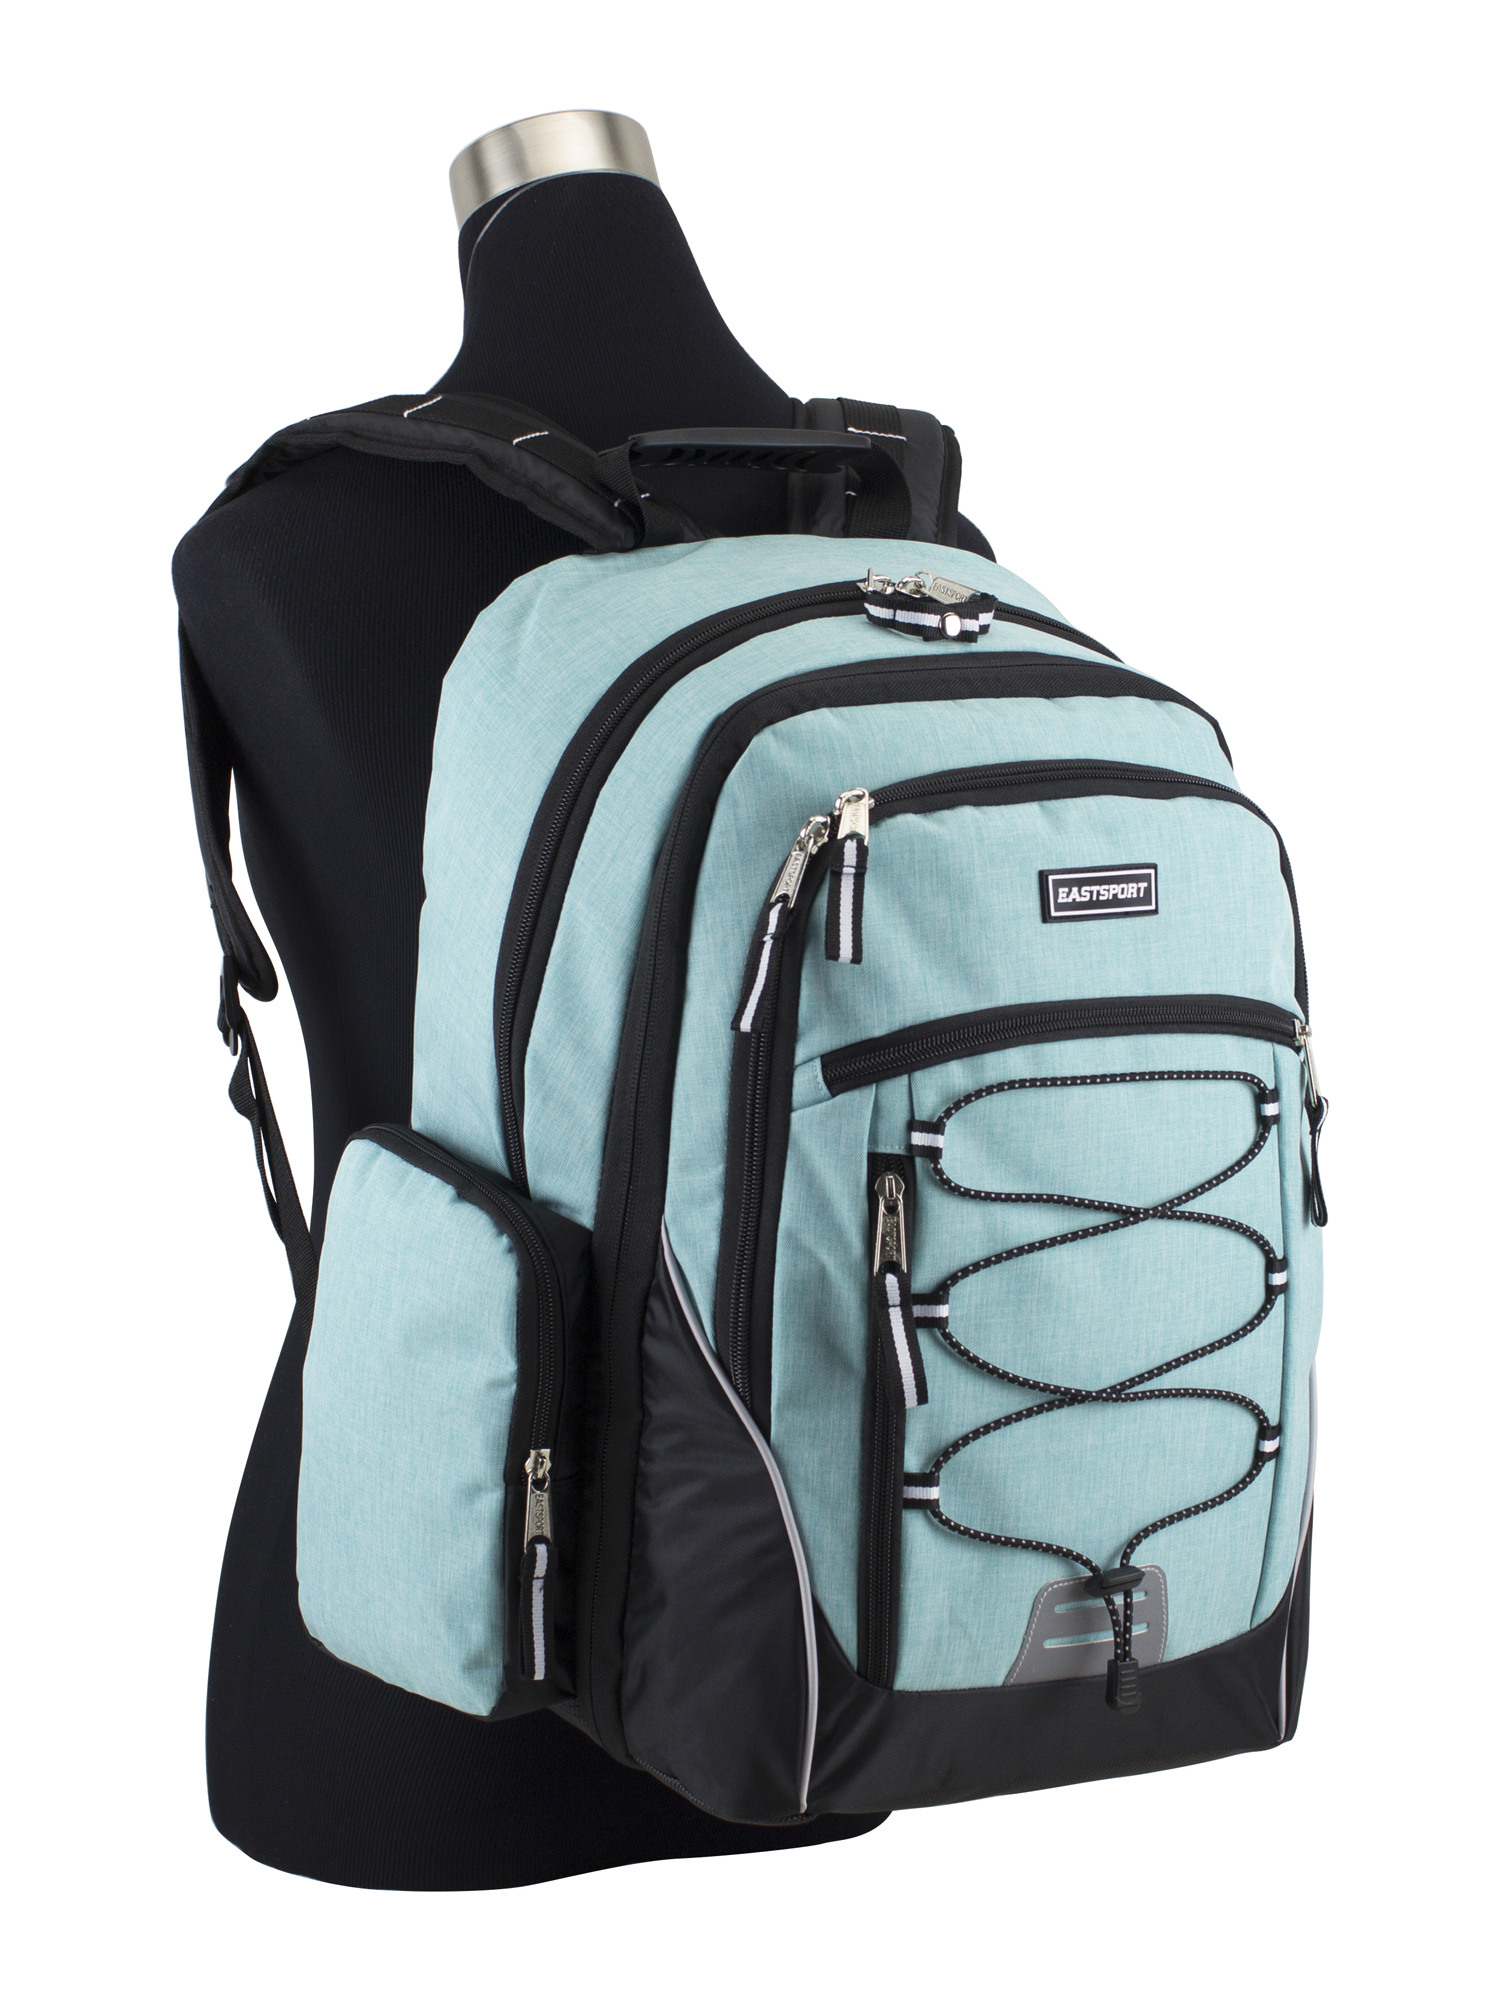 Eastsport Unisex Optimus Backpack, Mint - image 5 of 8